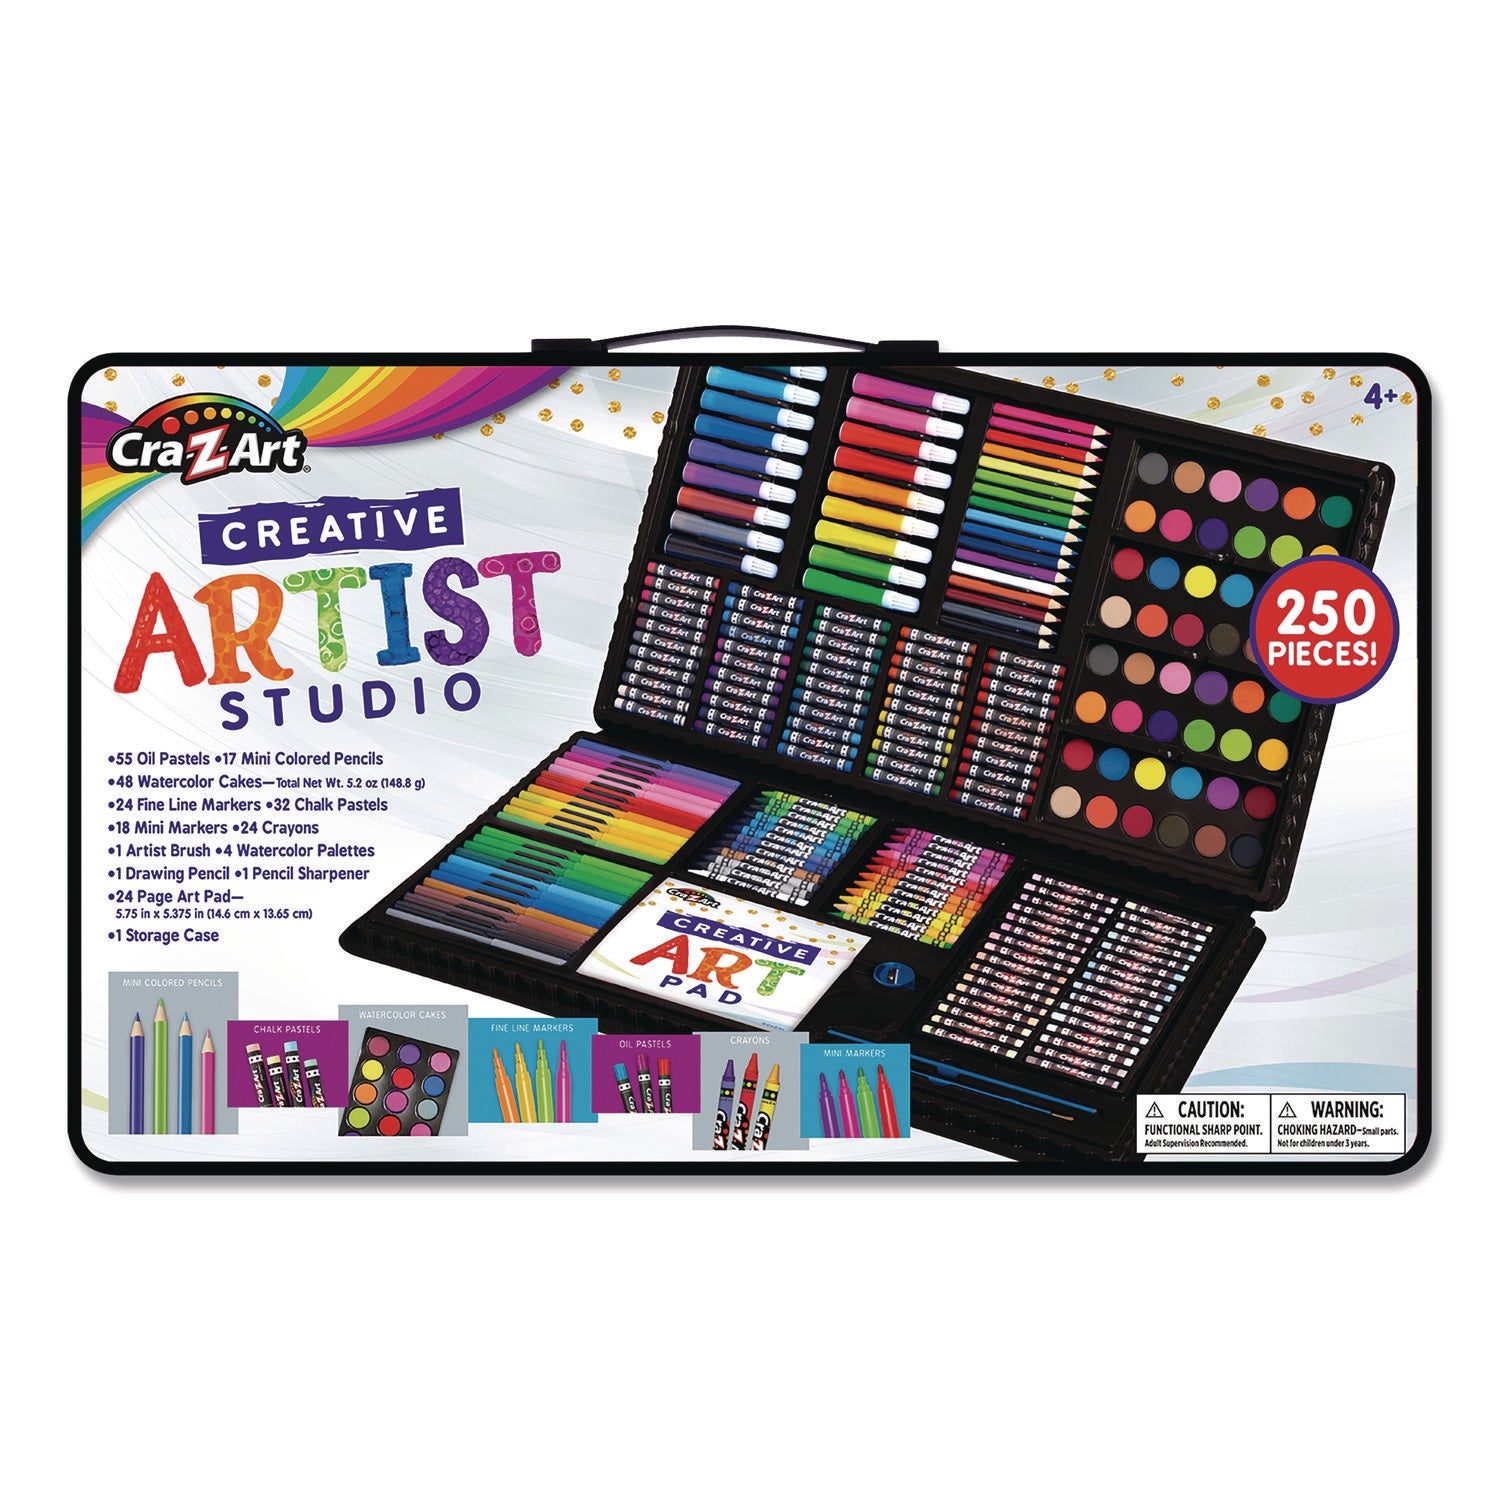 Creative Artist Studio, 250 Pieces - 1